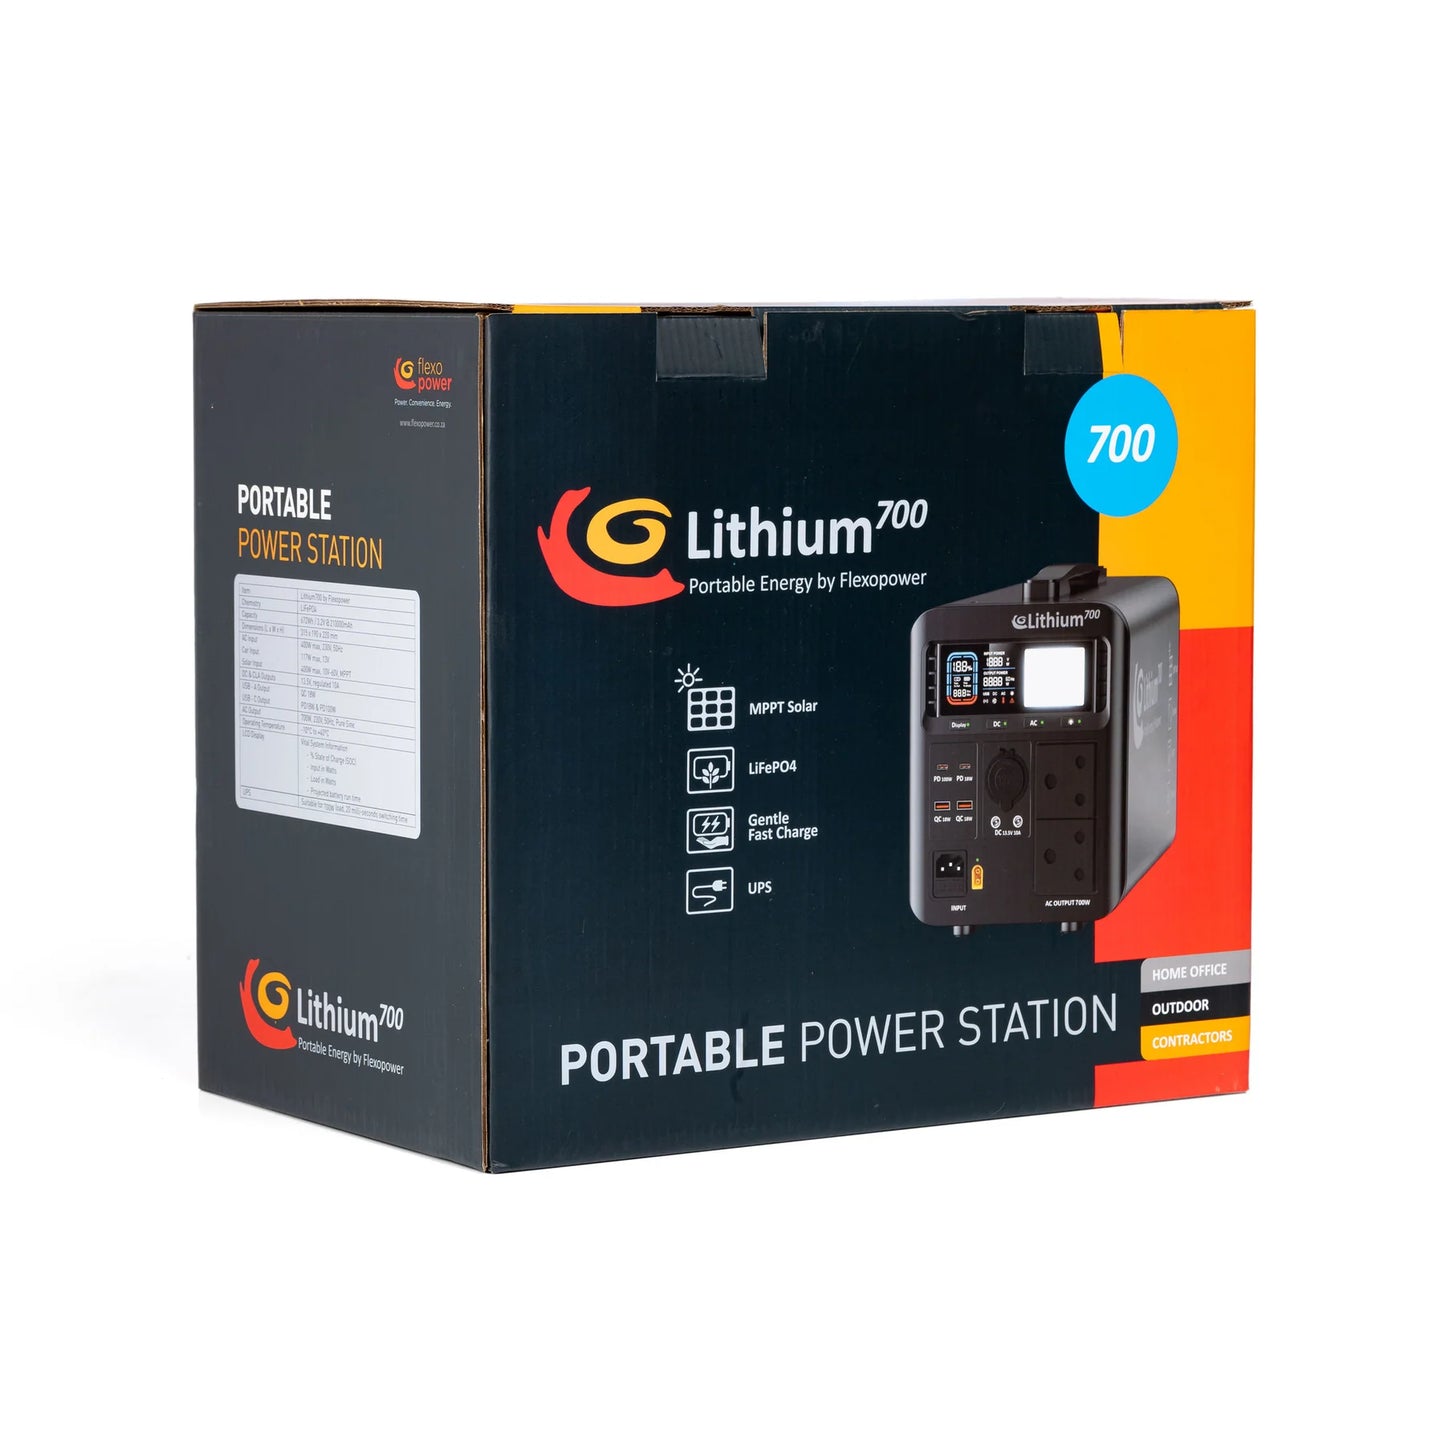 Lithium700 Portable Power Station